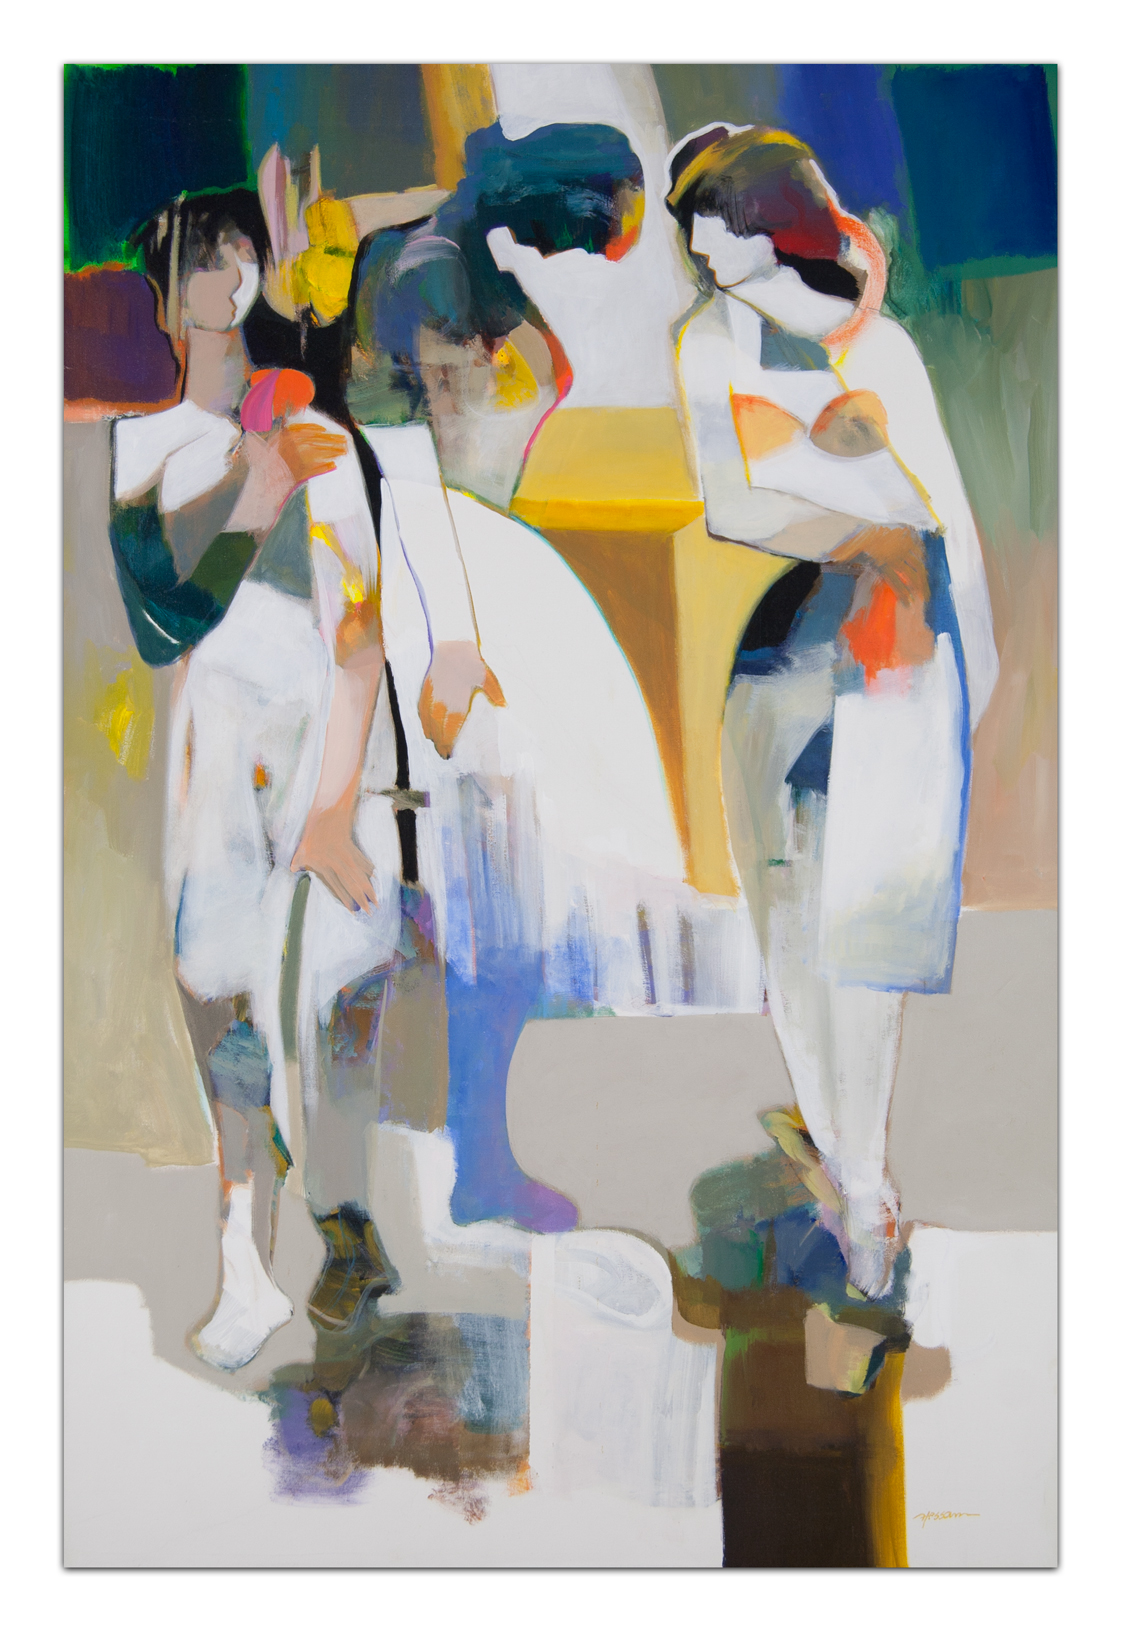 HESSAM ABRISHAMI - Unexpected - Acrylic on Canvas - 59x39 inches